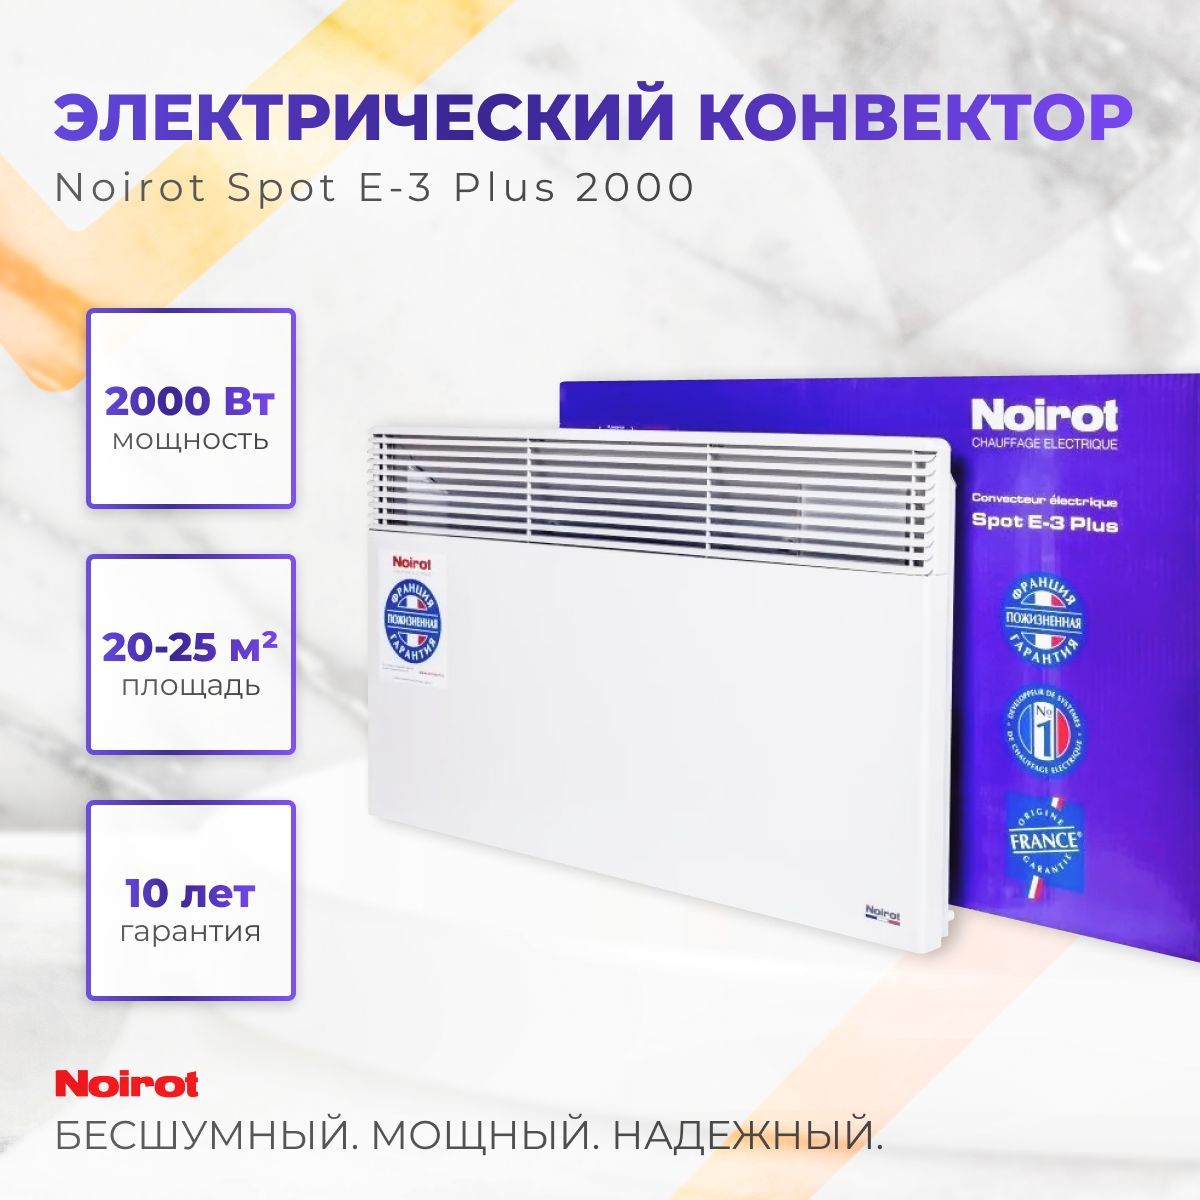 Noirot spot e-III Plus-2000.